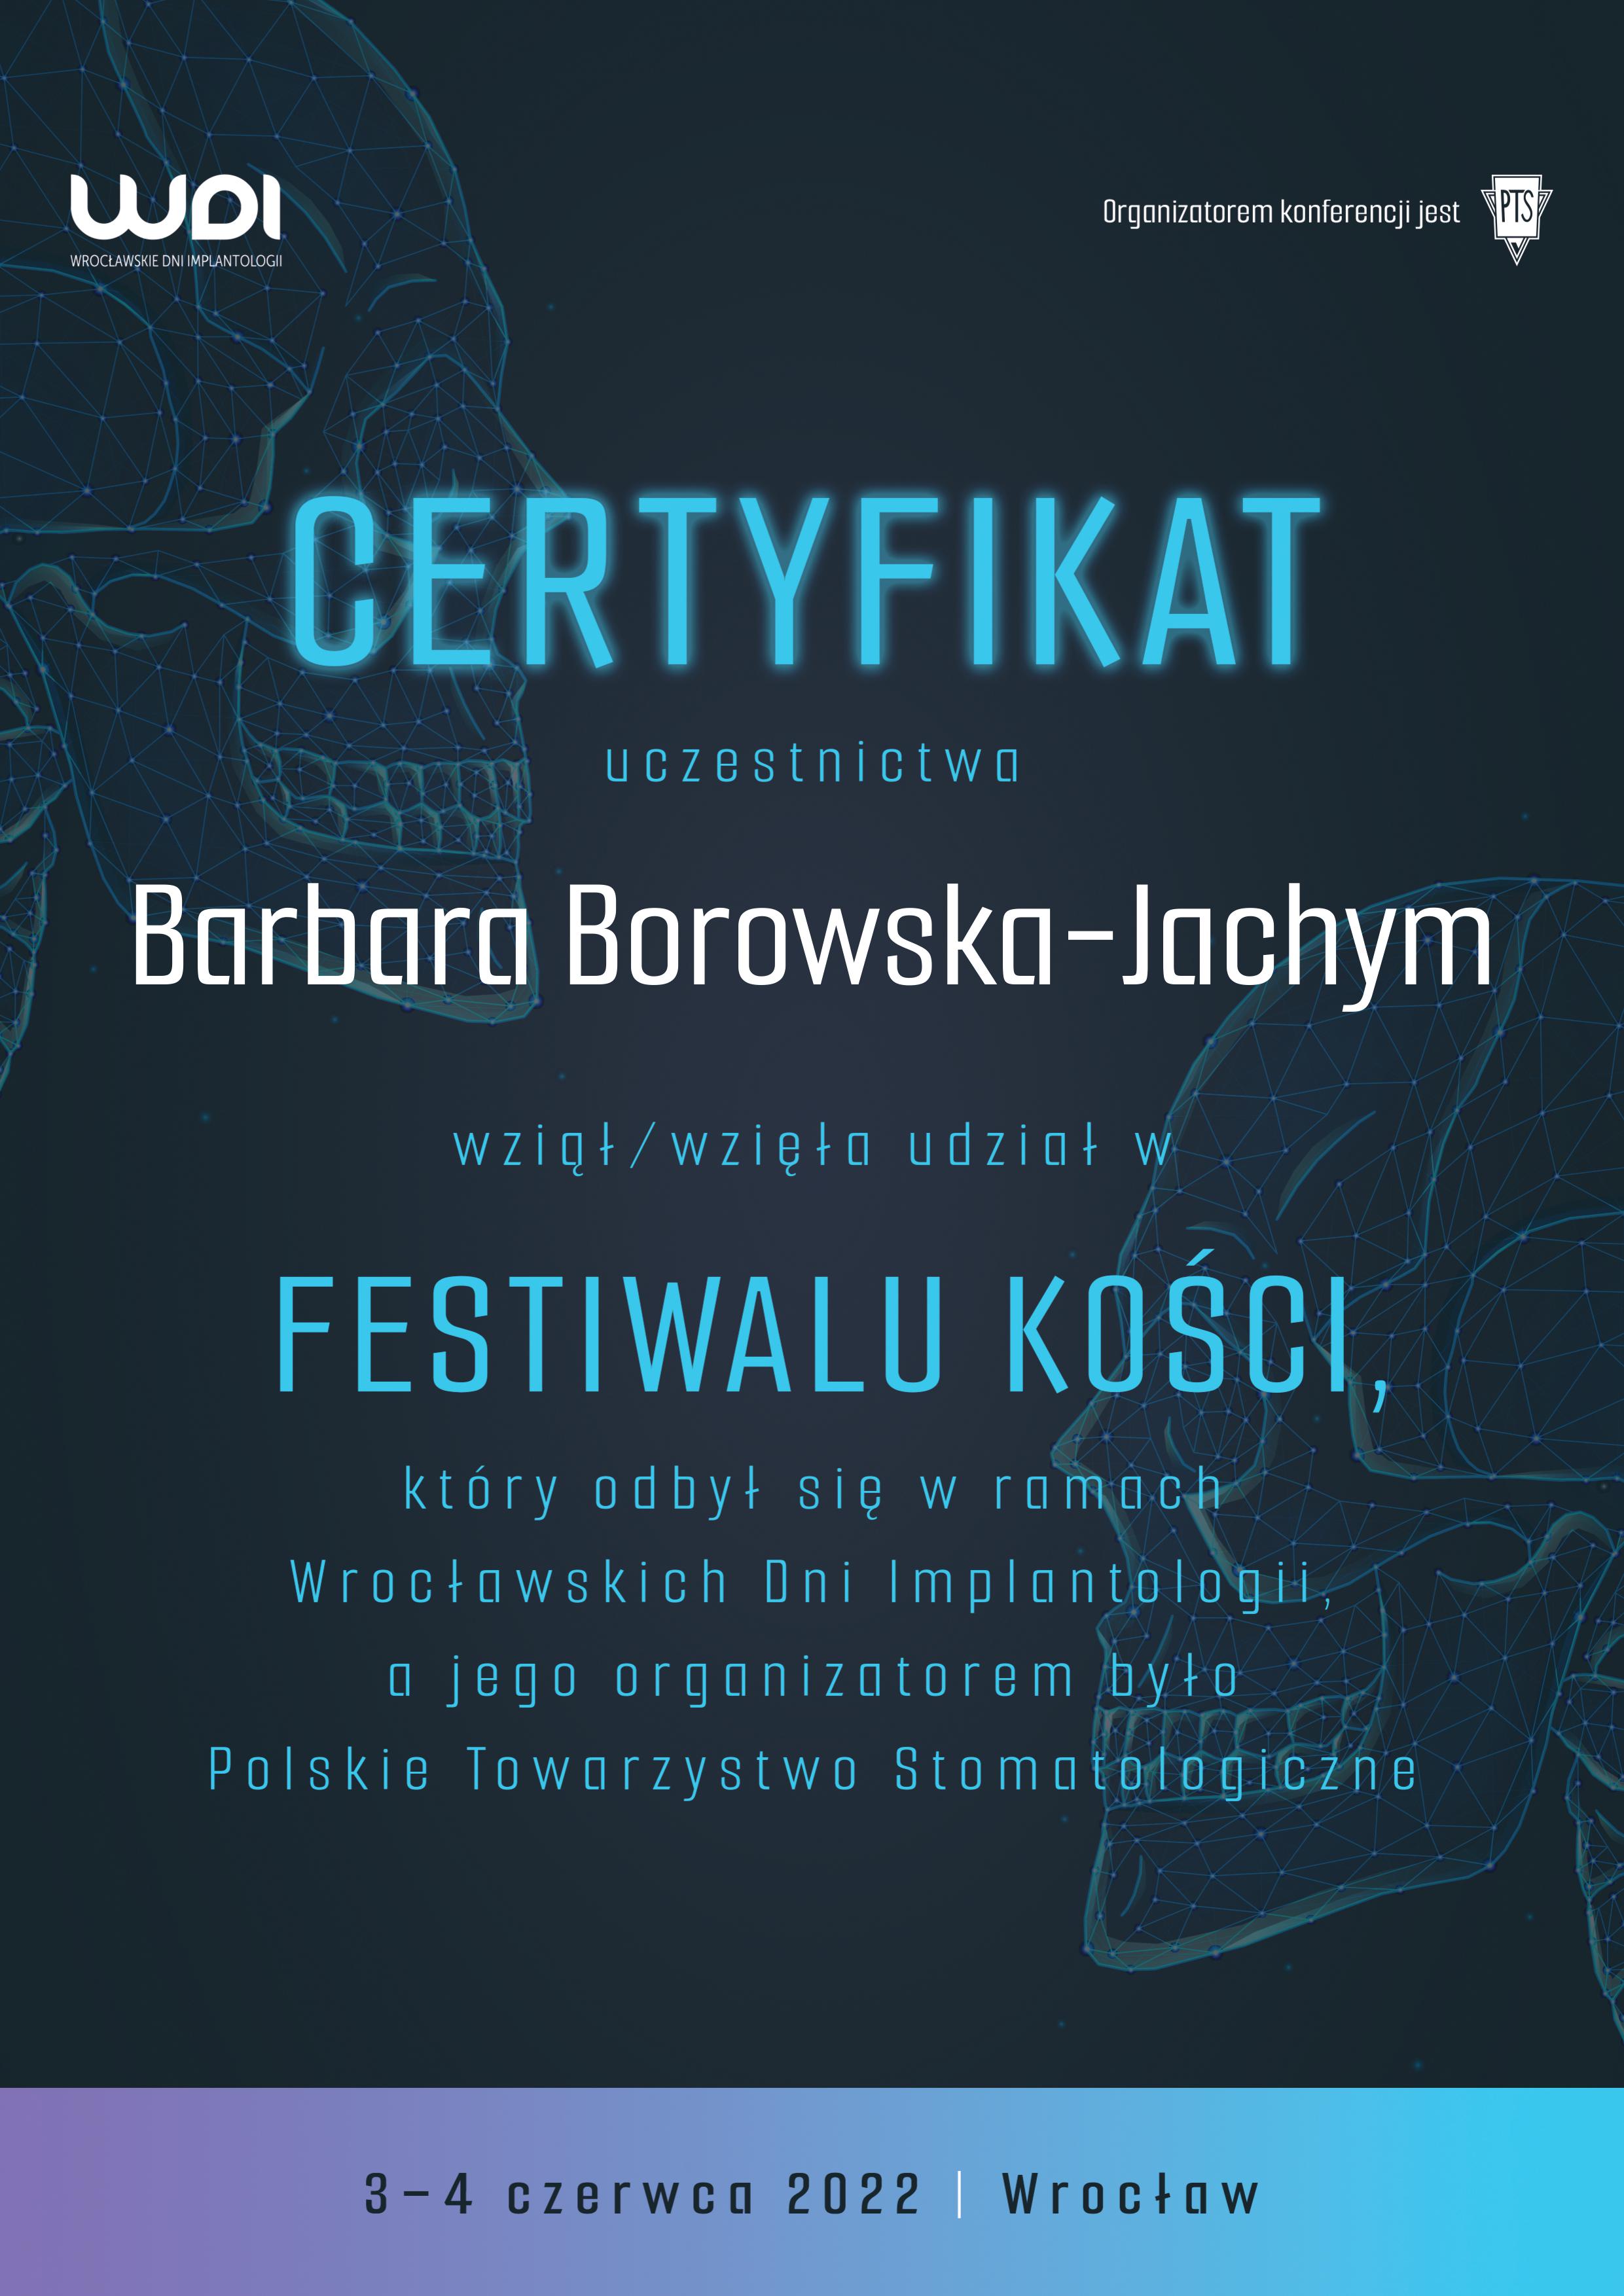 Festiwal Kości certyfikat Cn7e54TF6204